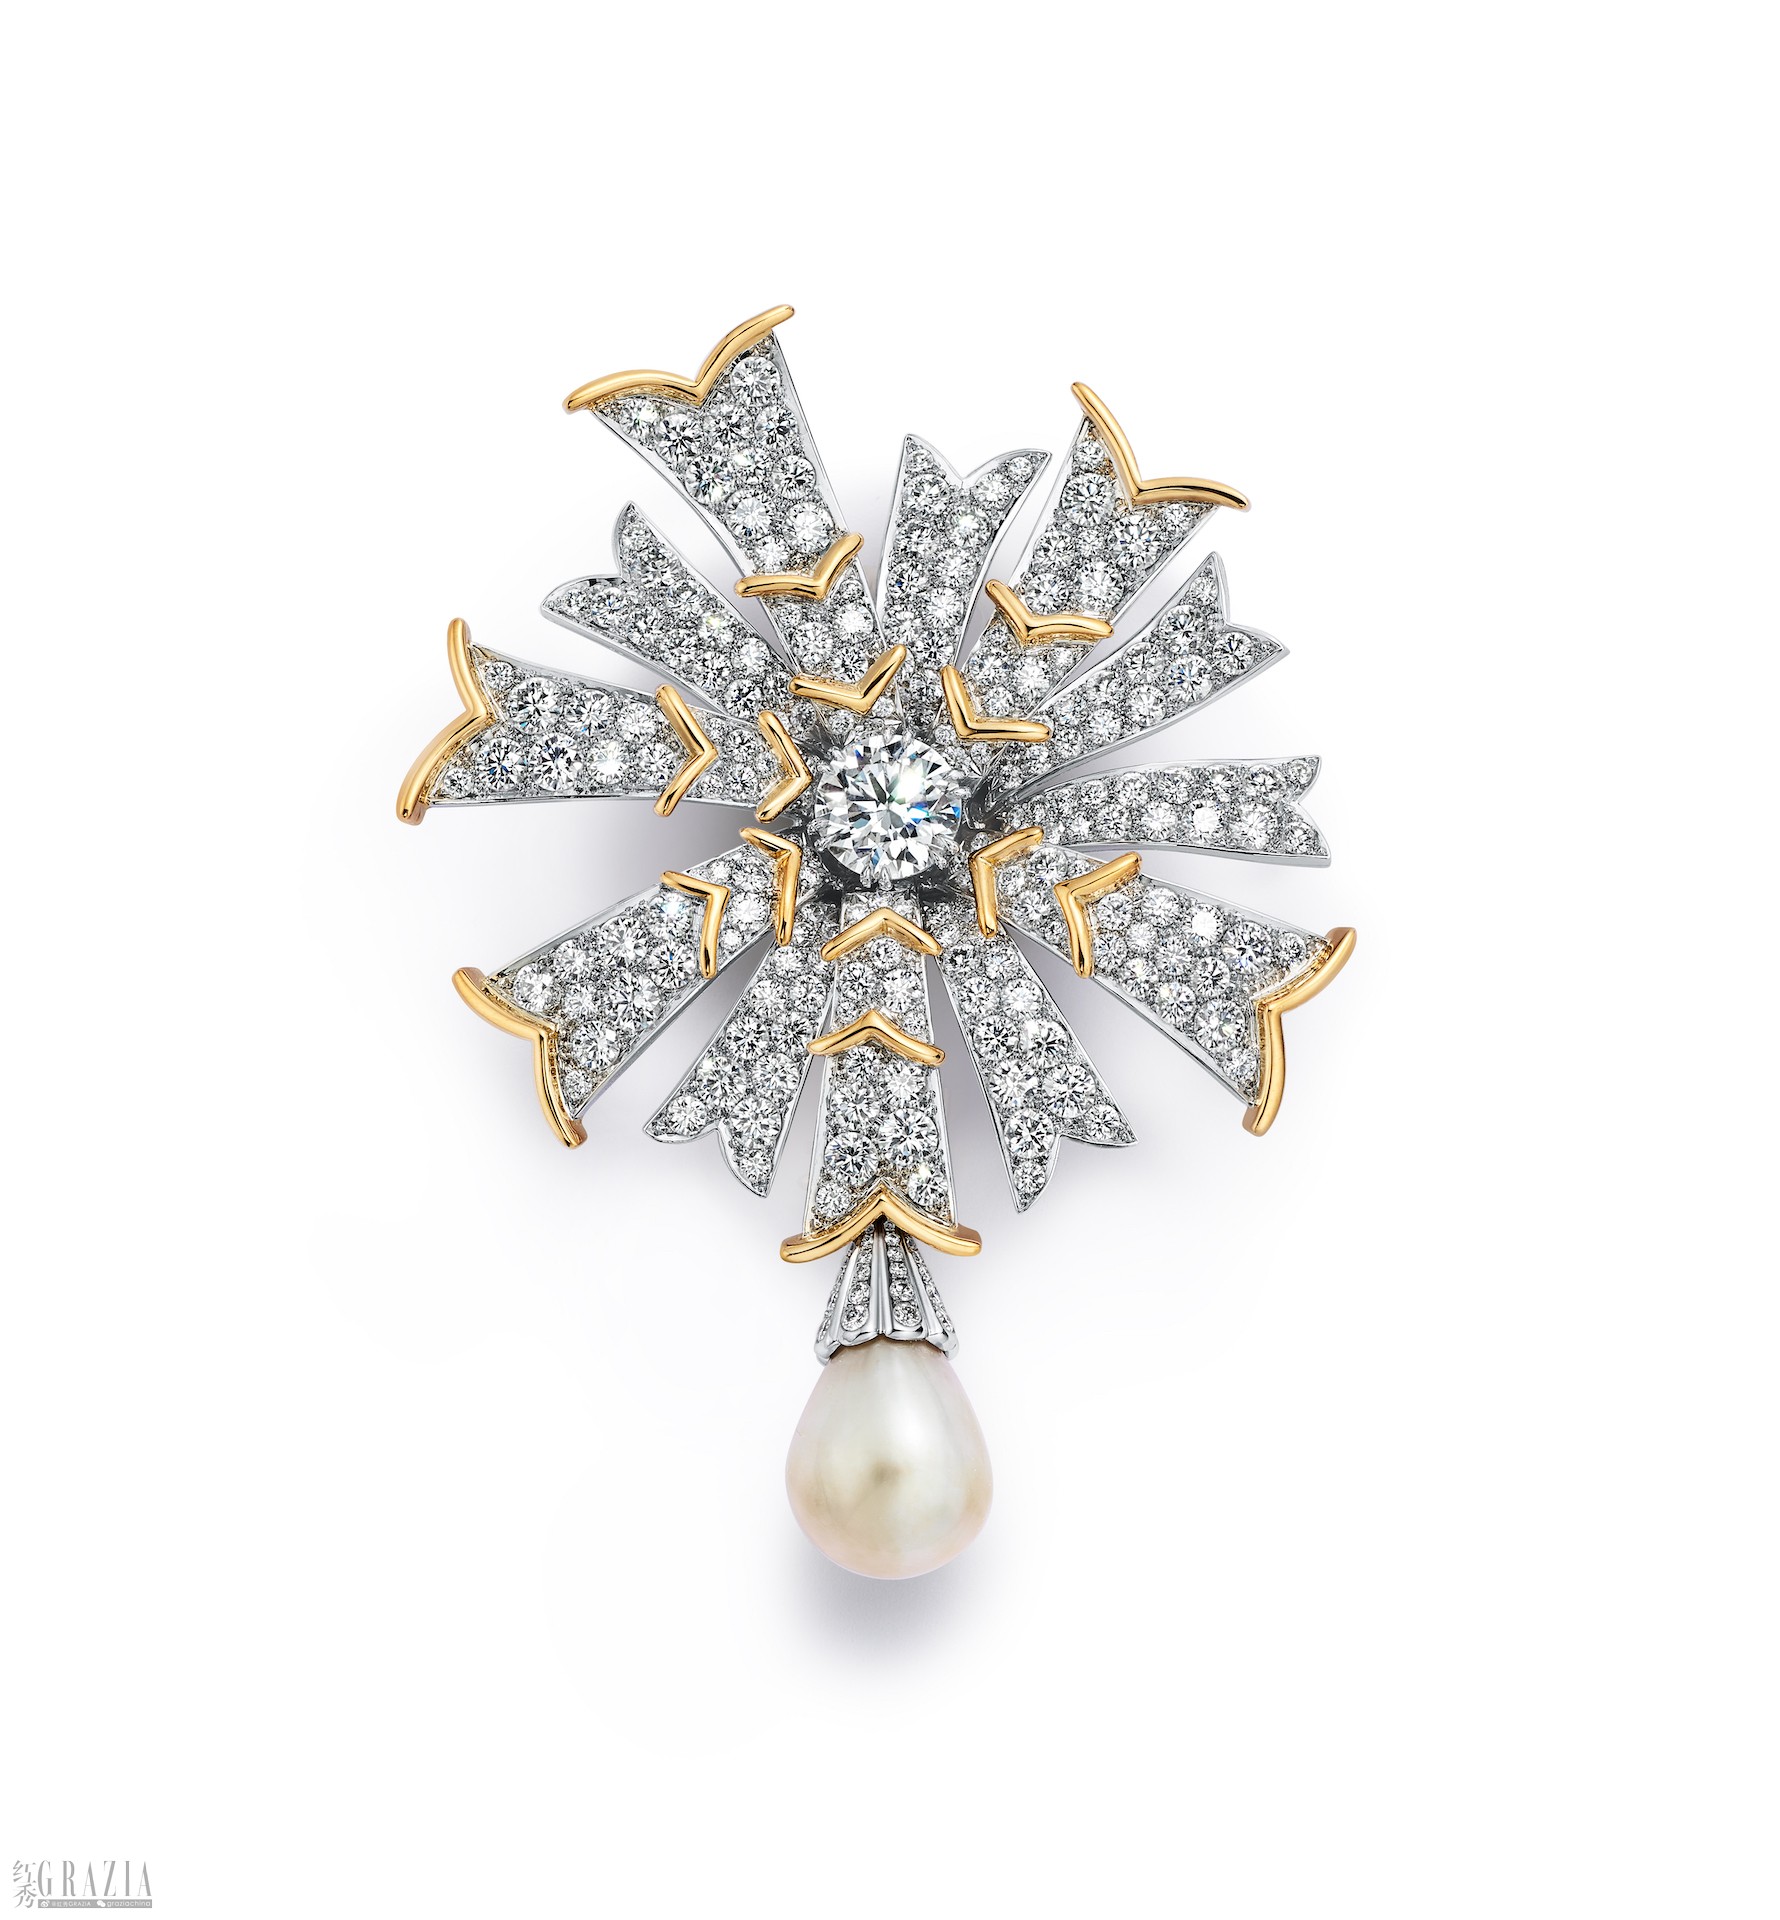 Tiffany & Co. 蒂芙尼Schlumberger™高级珠宝系列铂金及18K黄金镶嵌一颗重逾16克拉的奶油色水滴形天然海水珍珠及钻石缎带造型胸针.jpg